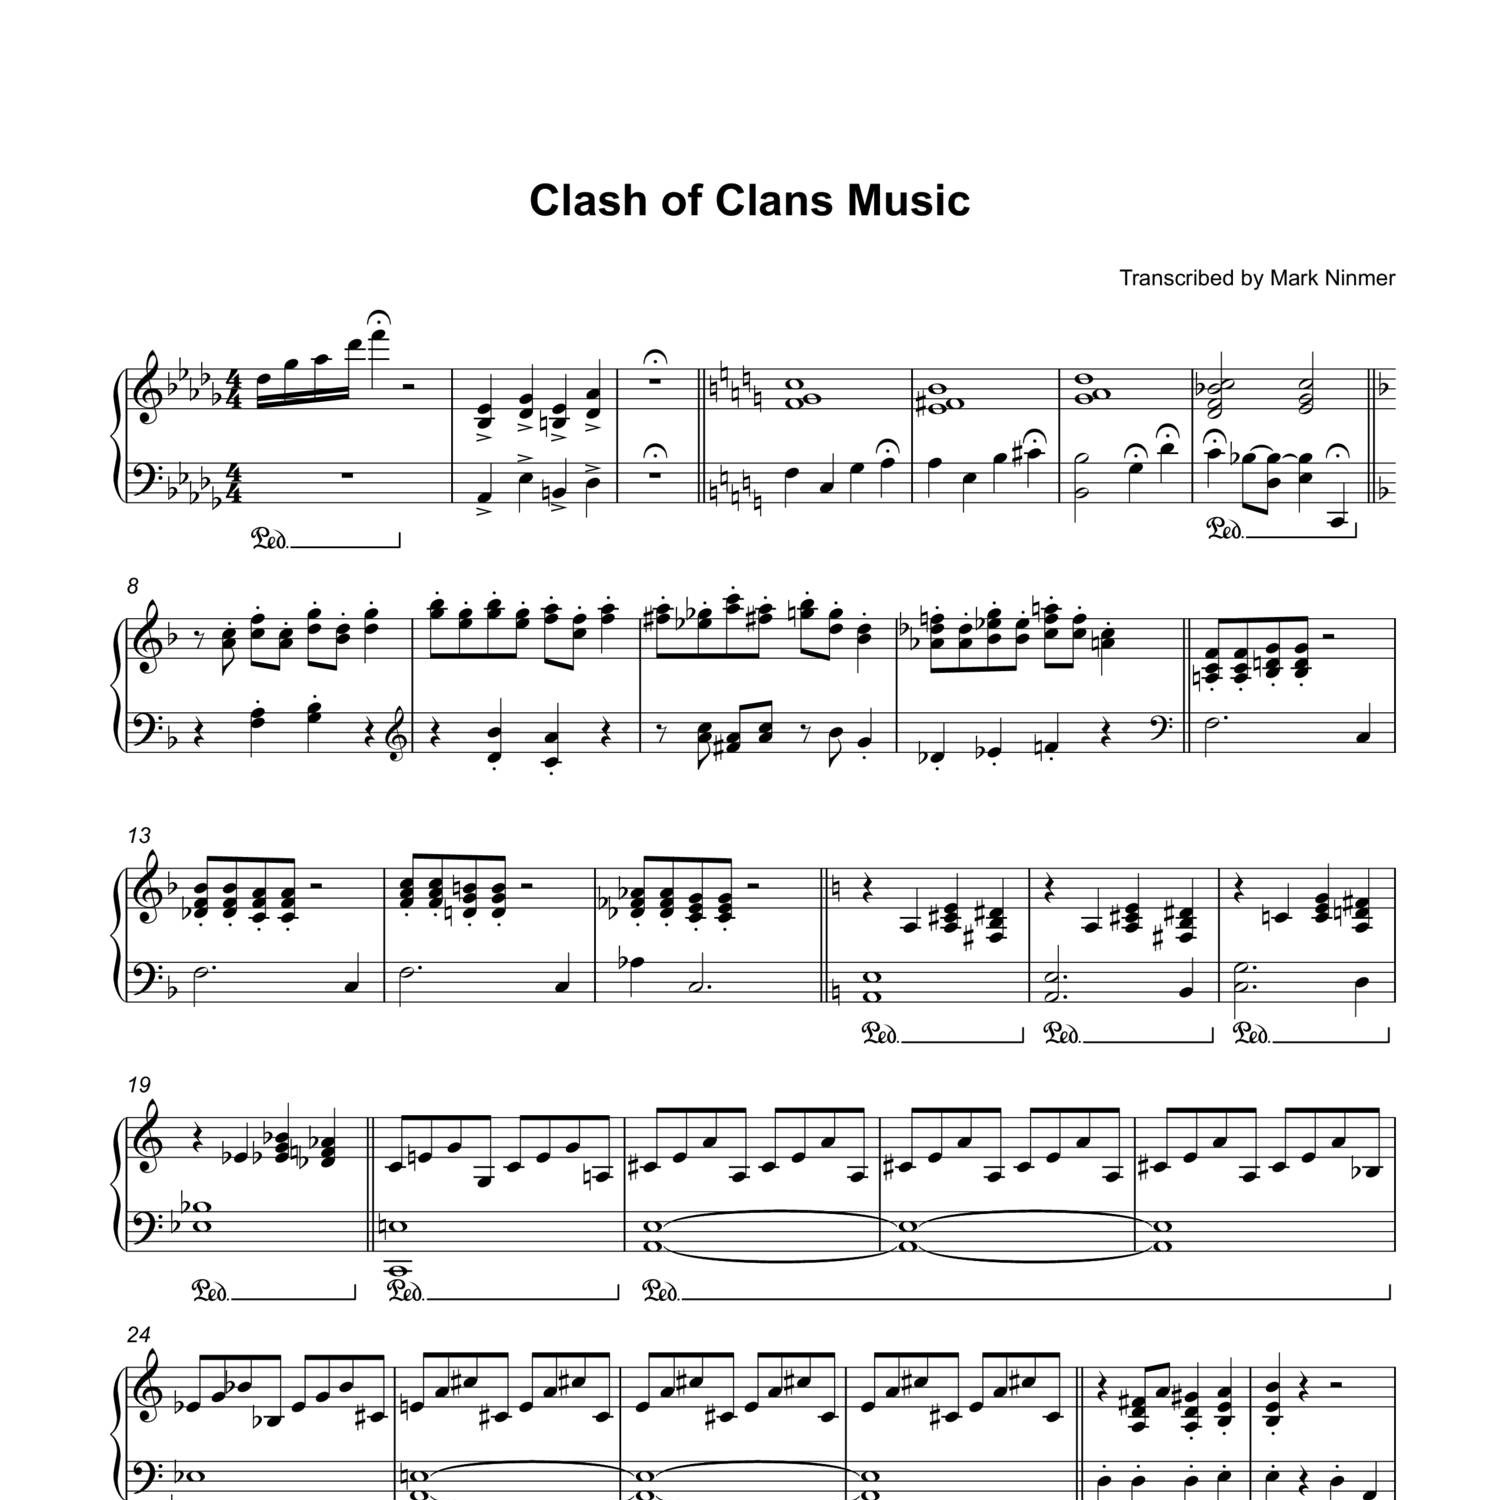 Clash of Clans Music - Full Score.pdf - DocDroid